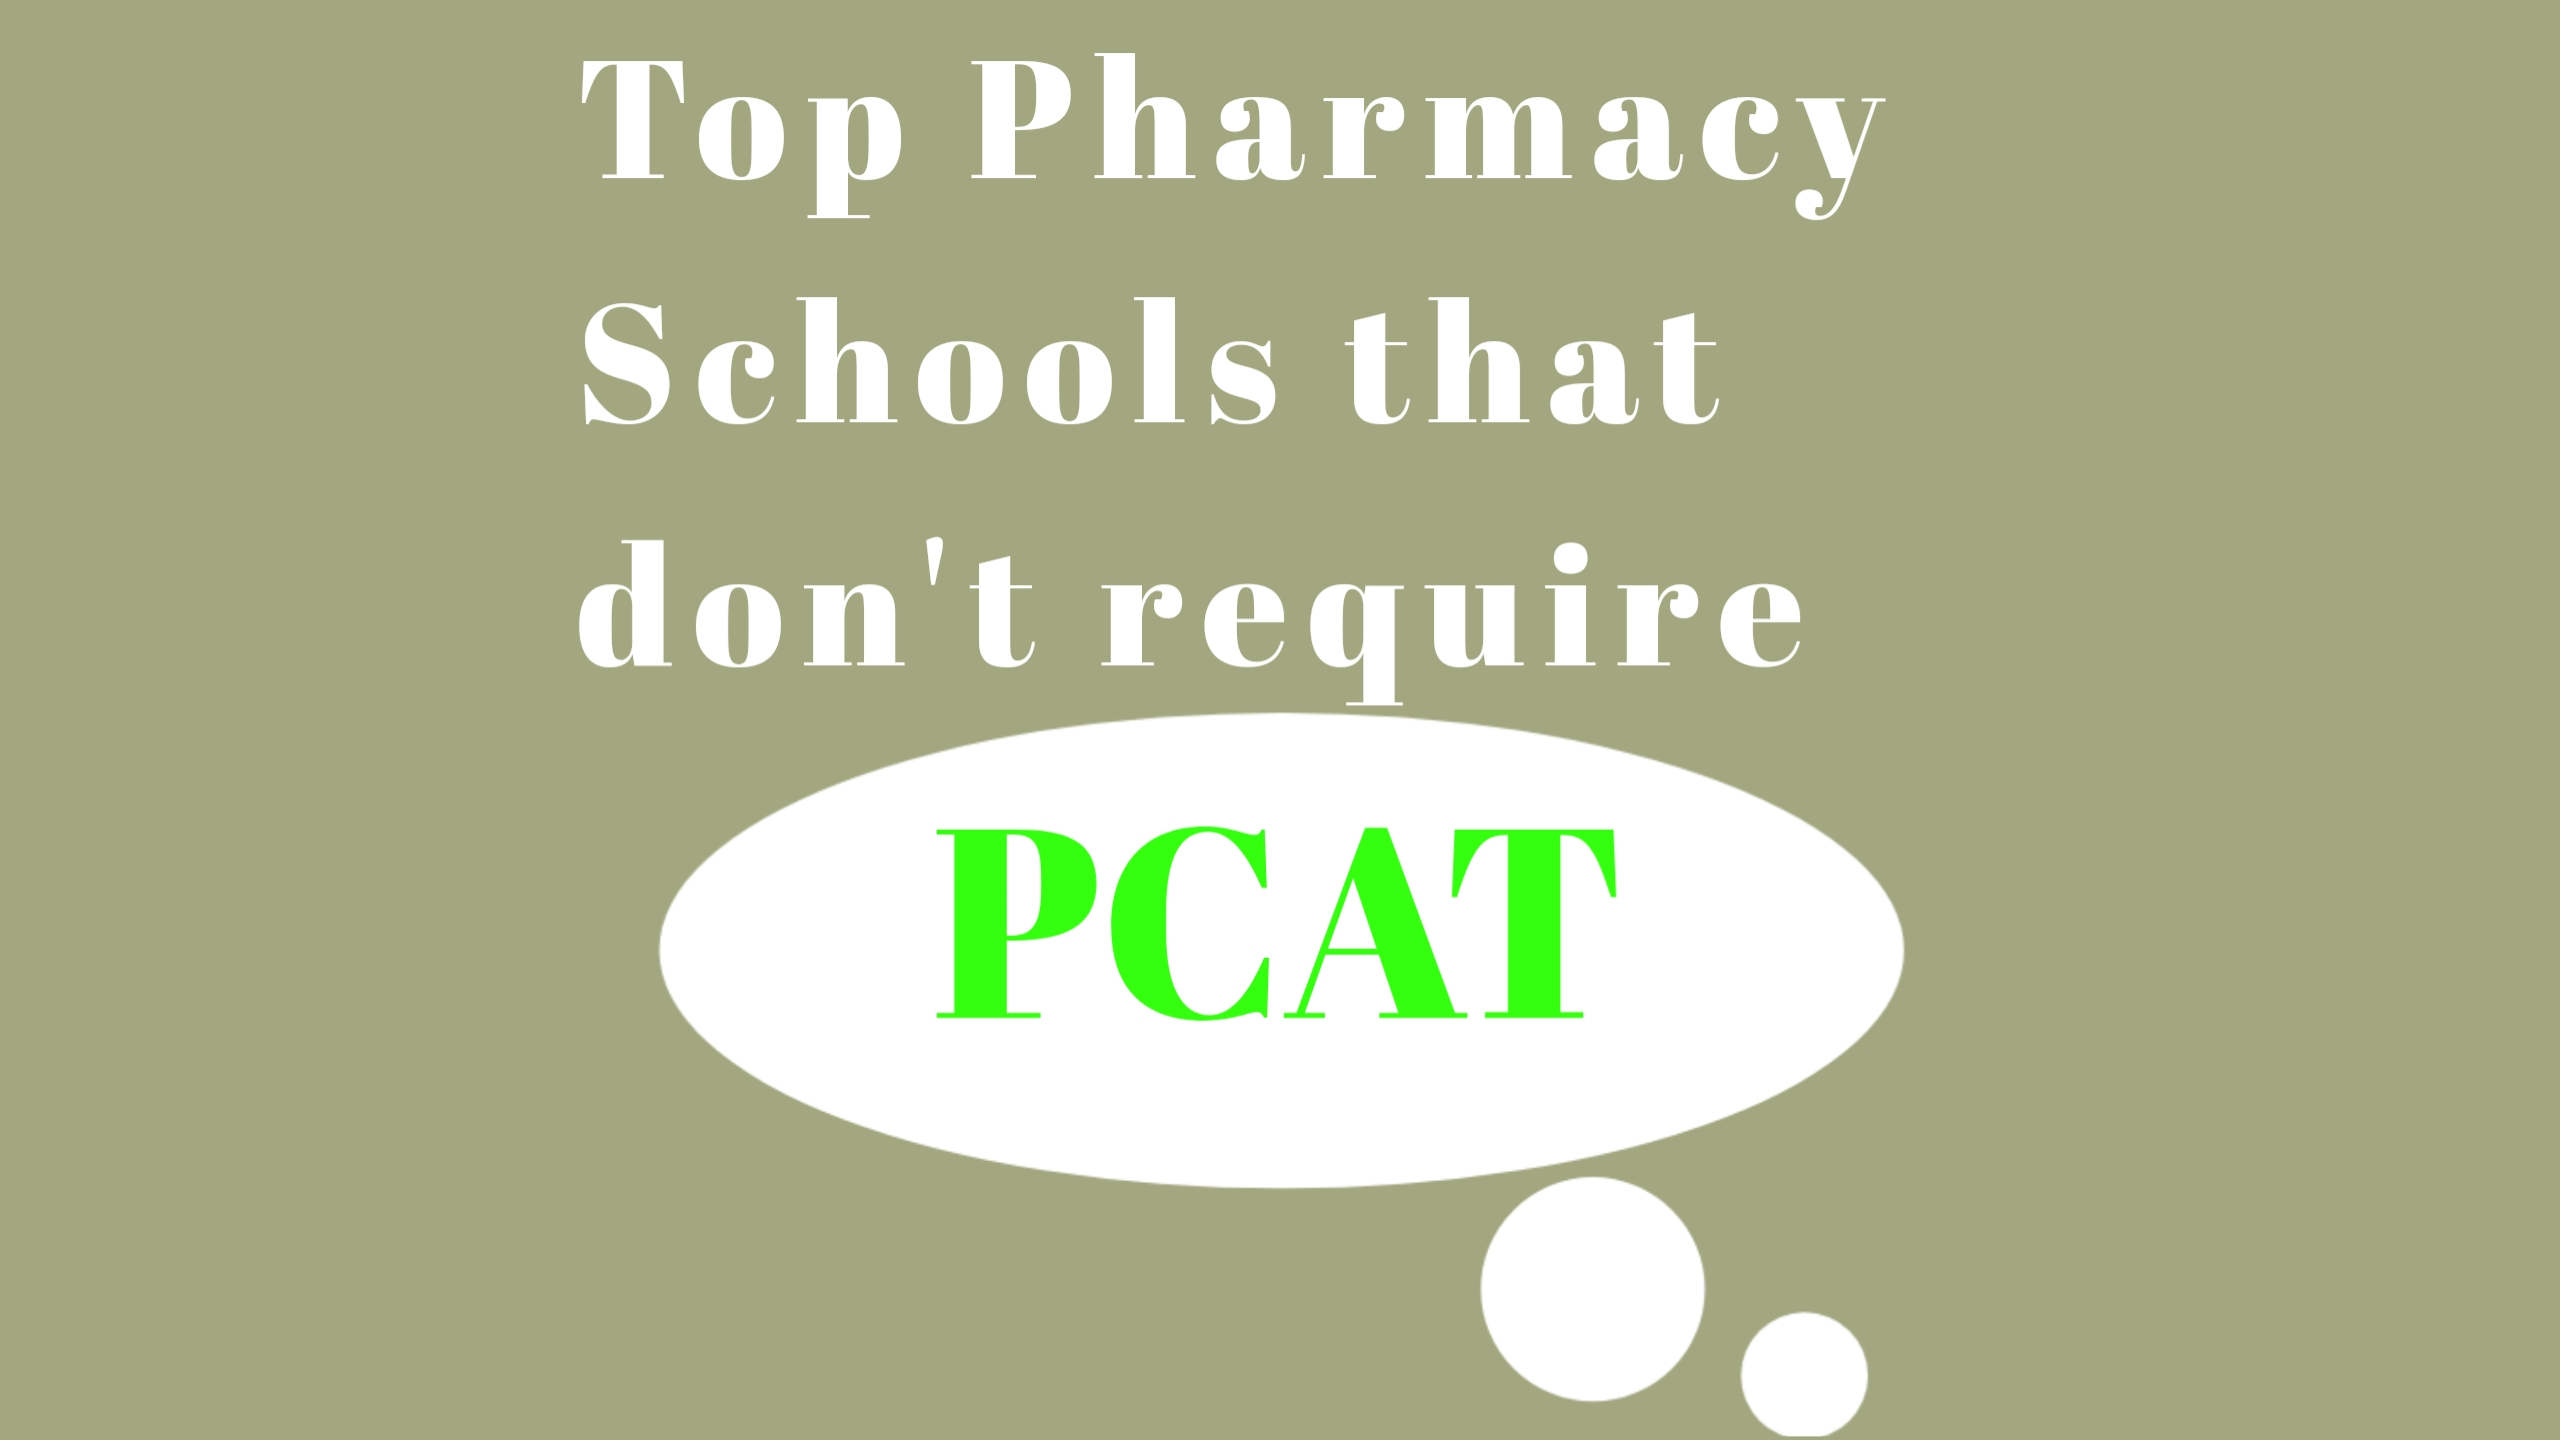 Pharmacy Schools that do not require pcat